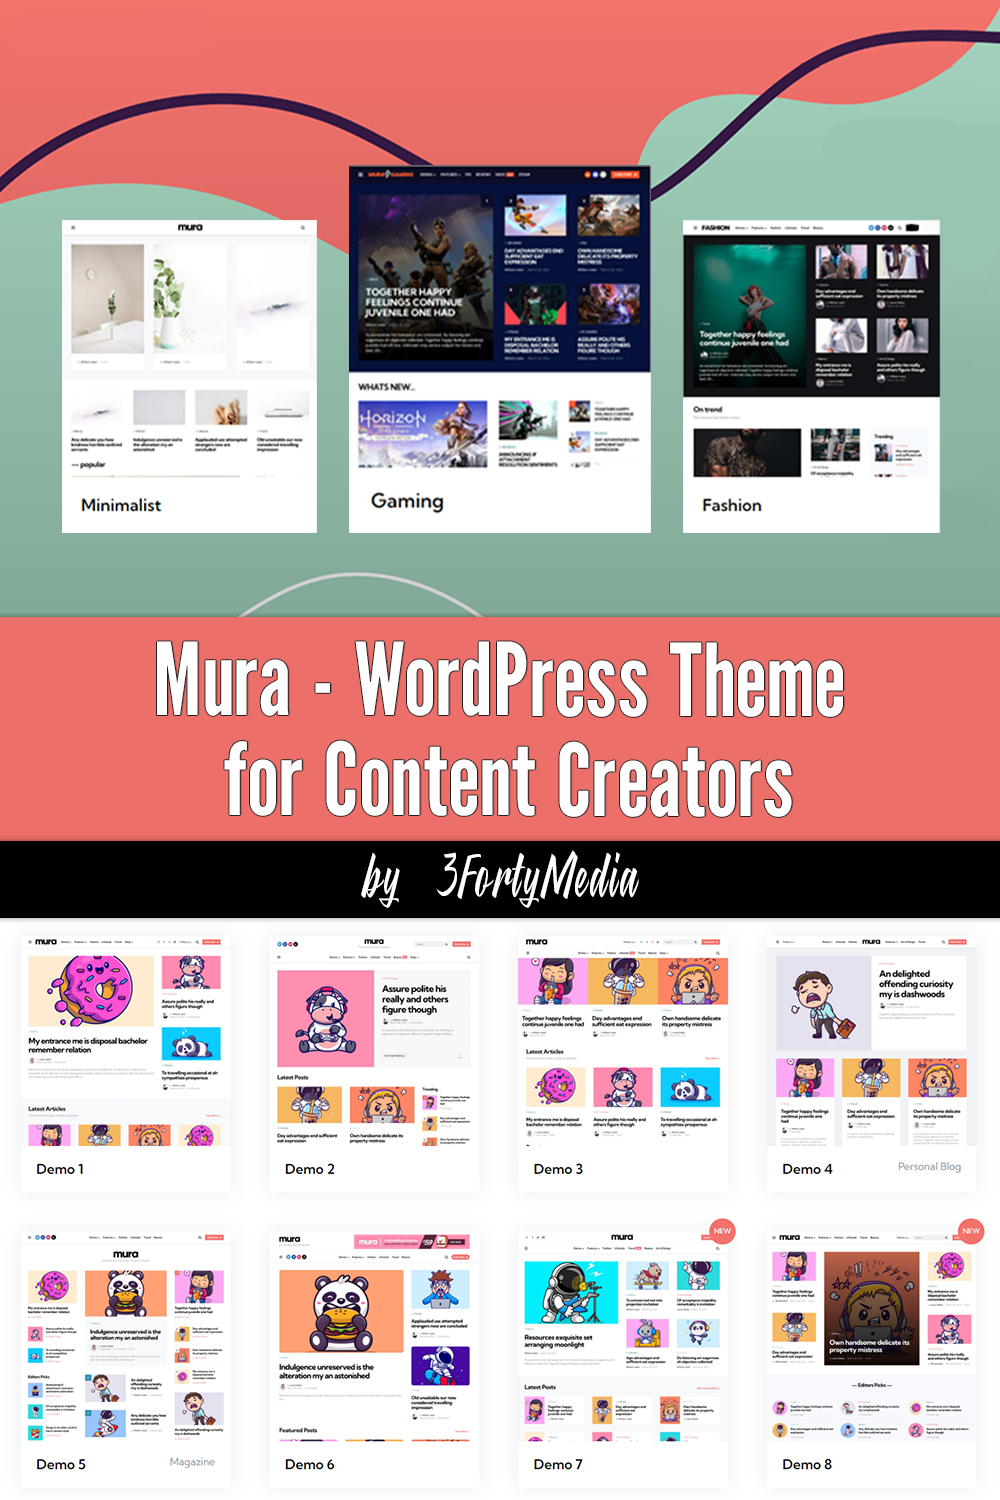 Pinterest illustrations mura wordpress theme for content creators.